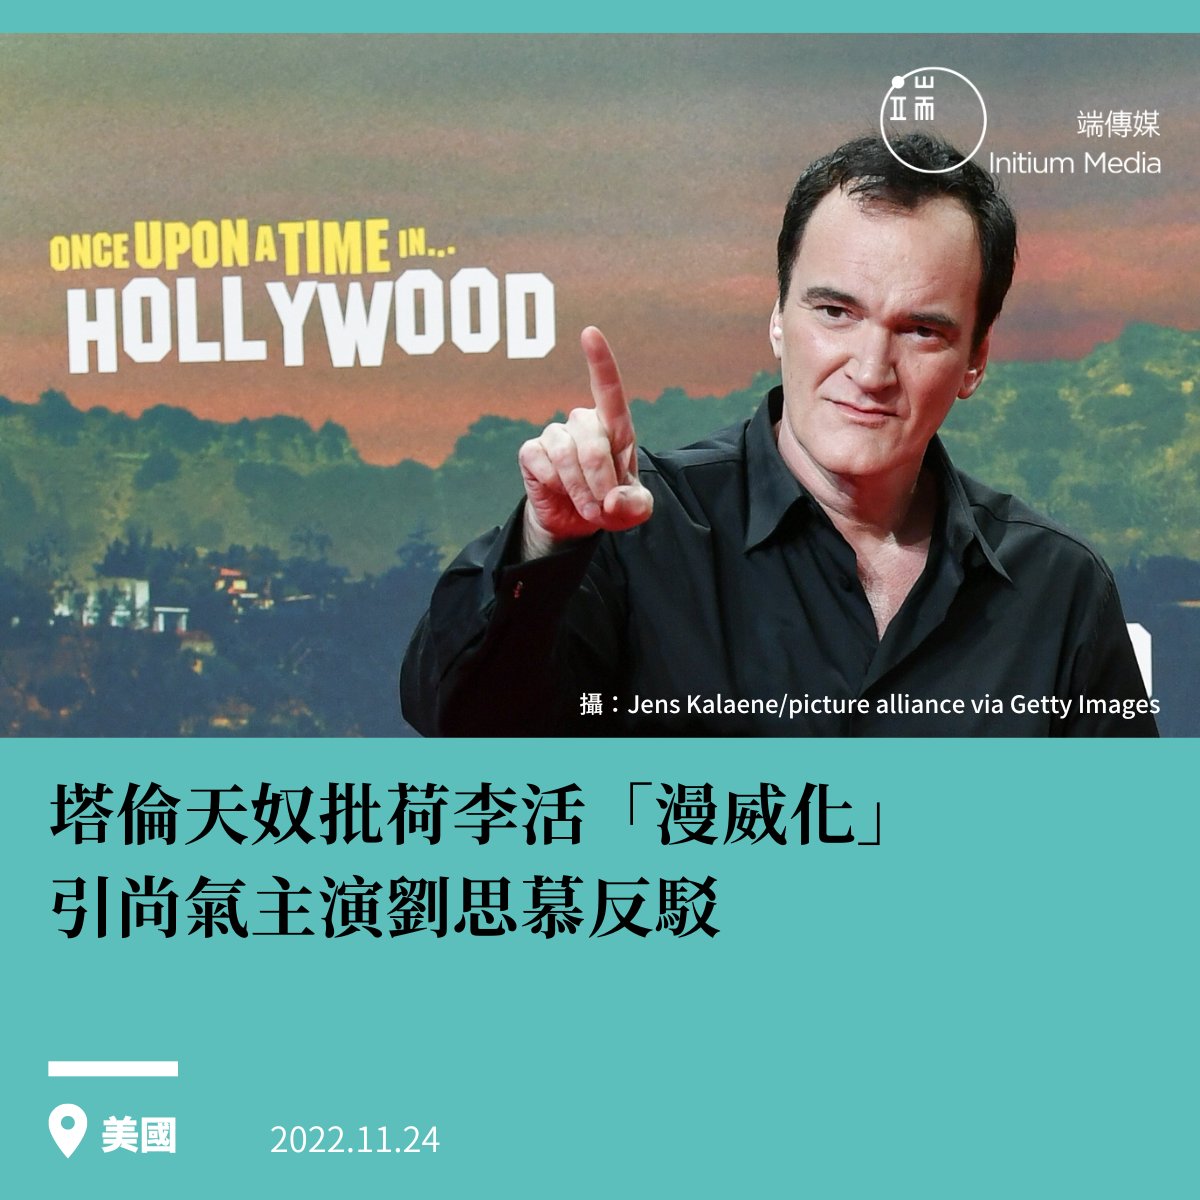 @initiumnews's photo on Tarantino